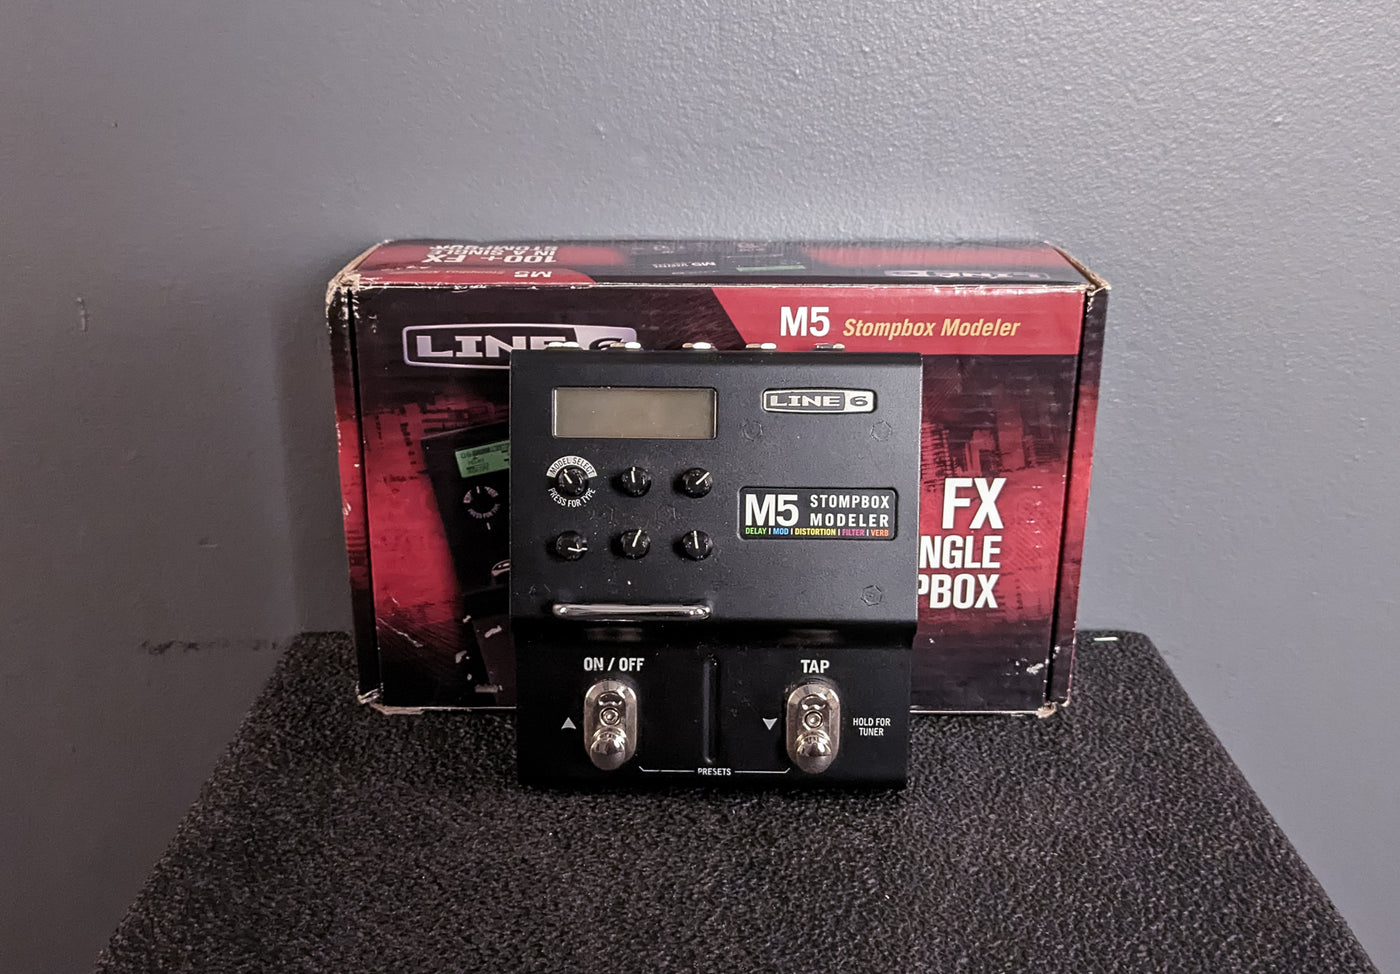 M5 Stompbox Modeler, Recent